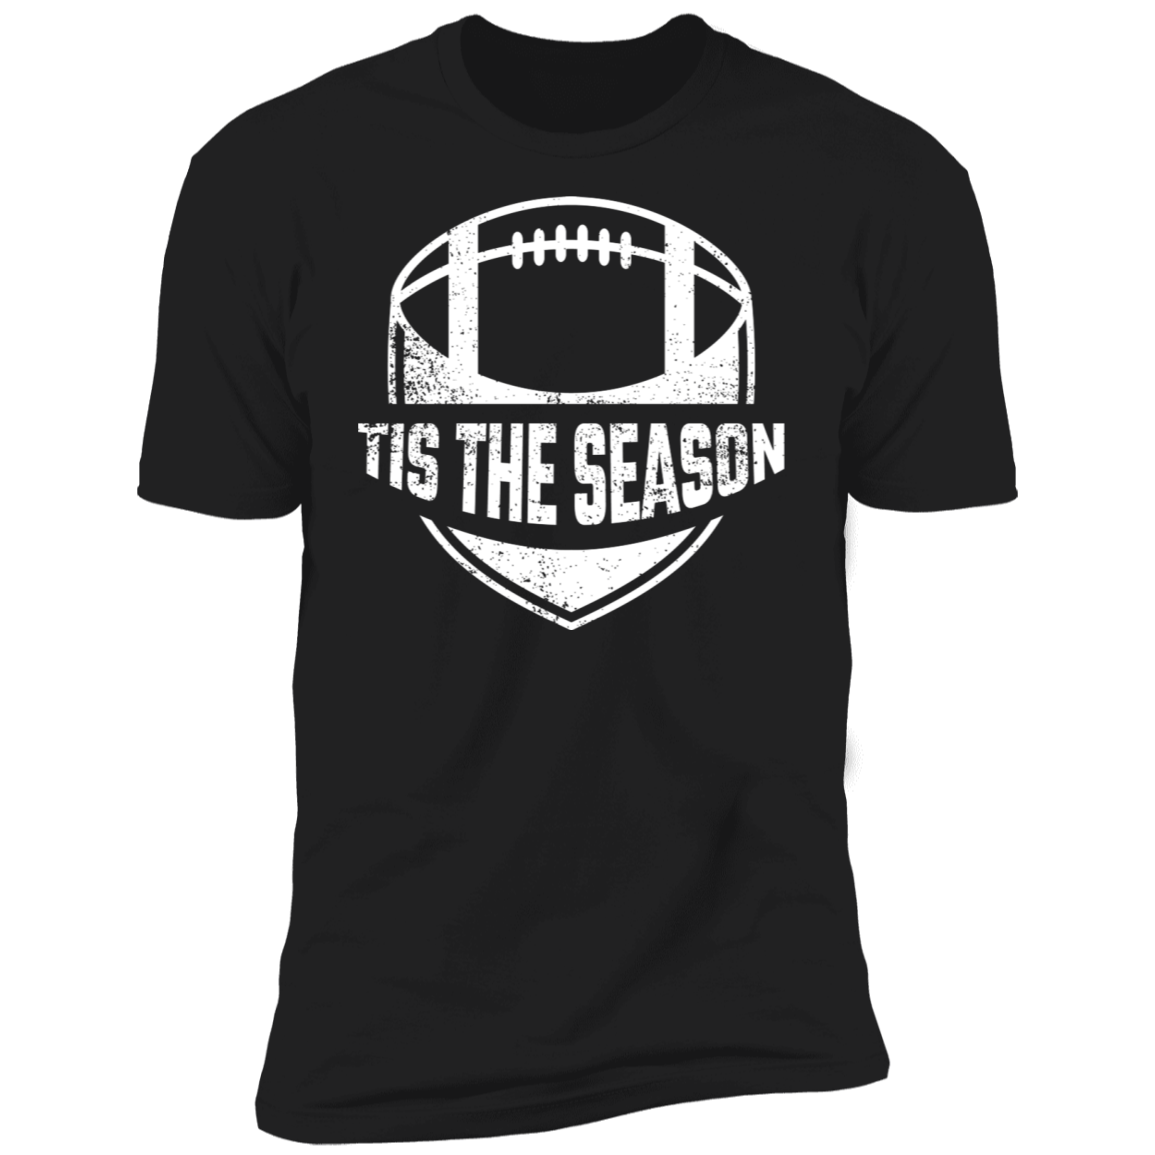 Tis The Season Football T-Shirt Apparel - The Beer Lodge